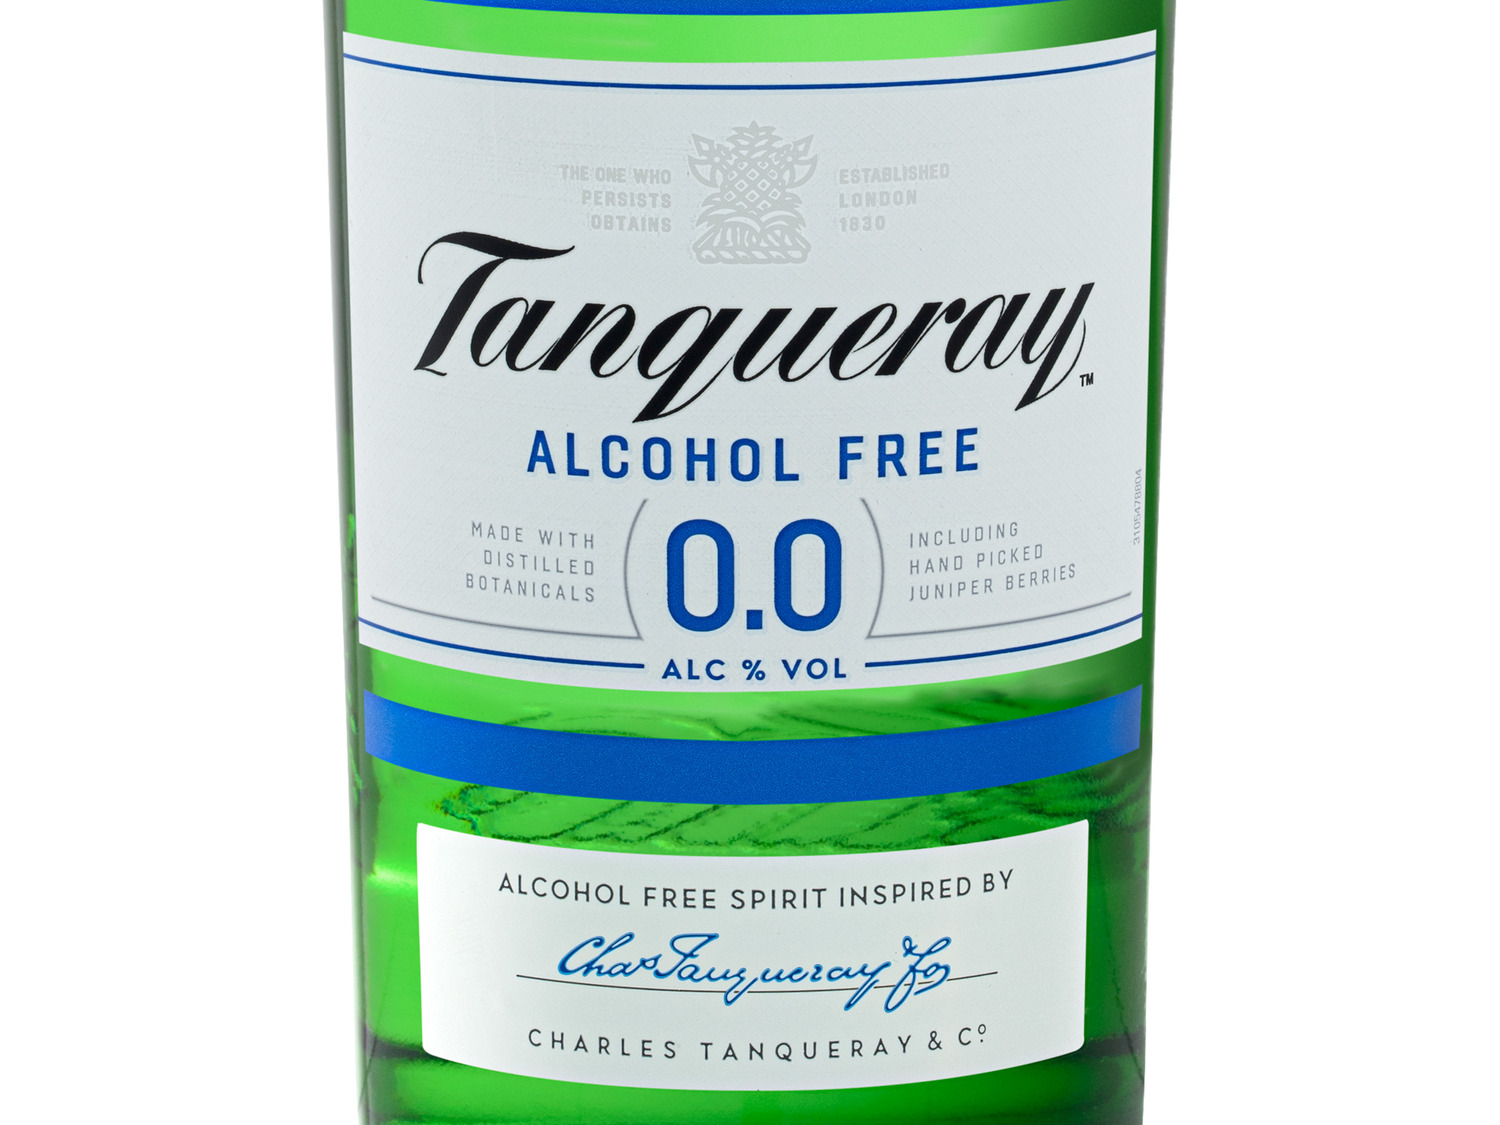 Tanqueray Alkoholfrei 0,0% online kaufen | LIDL